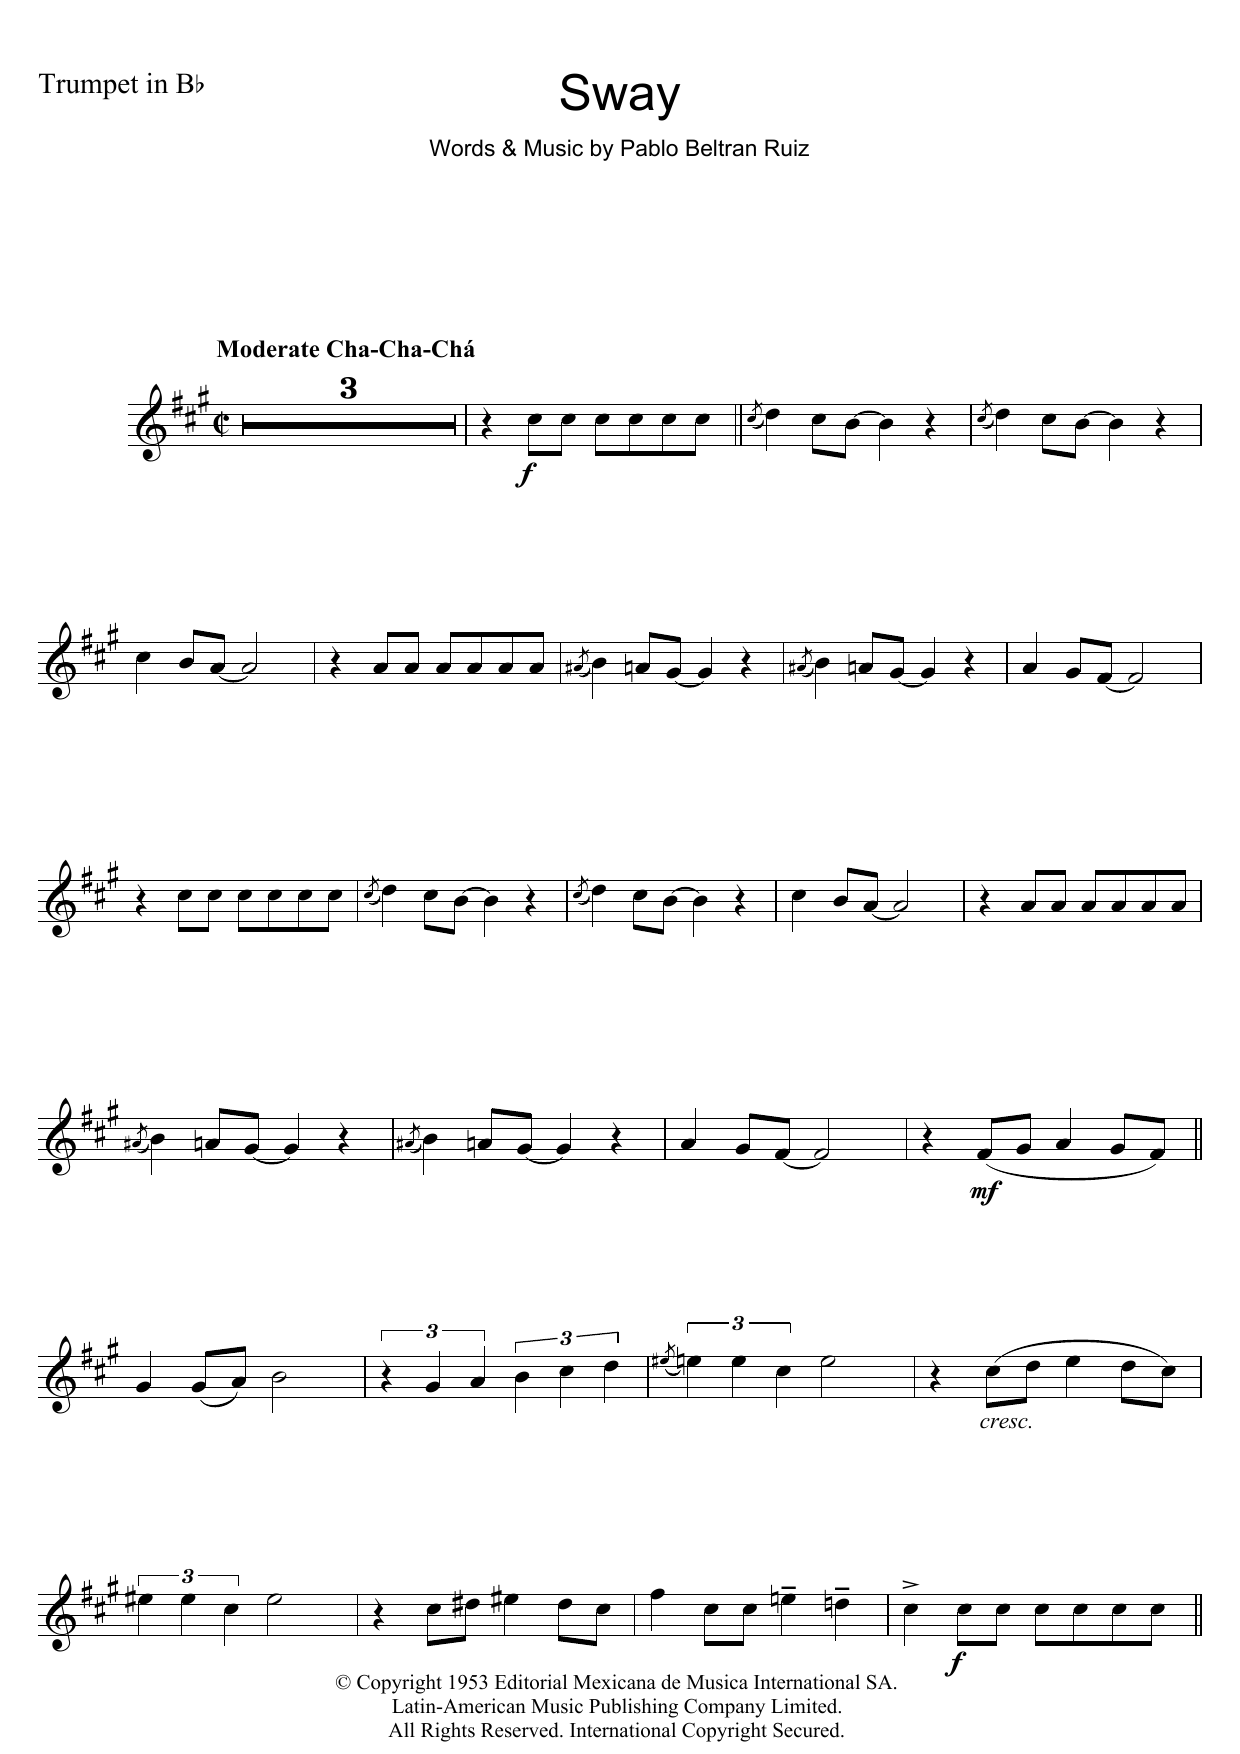 Download Pablo Beltran Ruiz Sway (Quien Sera) Sheet Music and learn how to play Tenor Saxophone PDF digital score in minutes